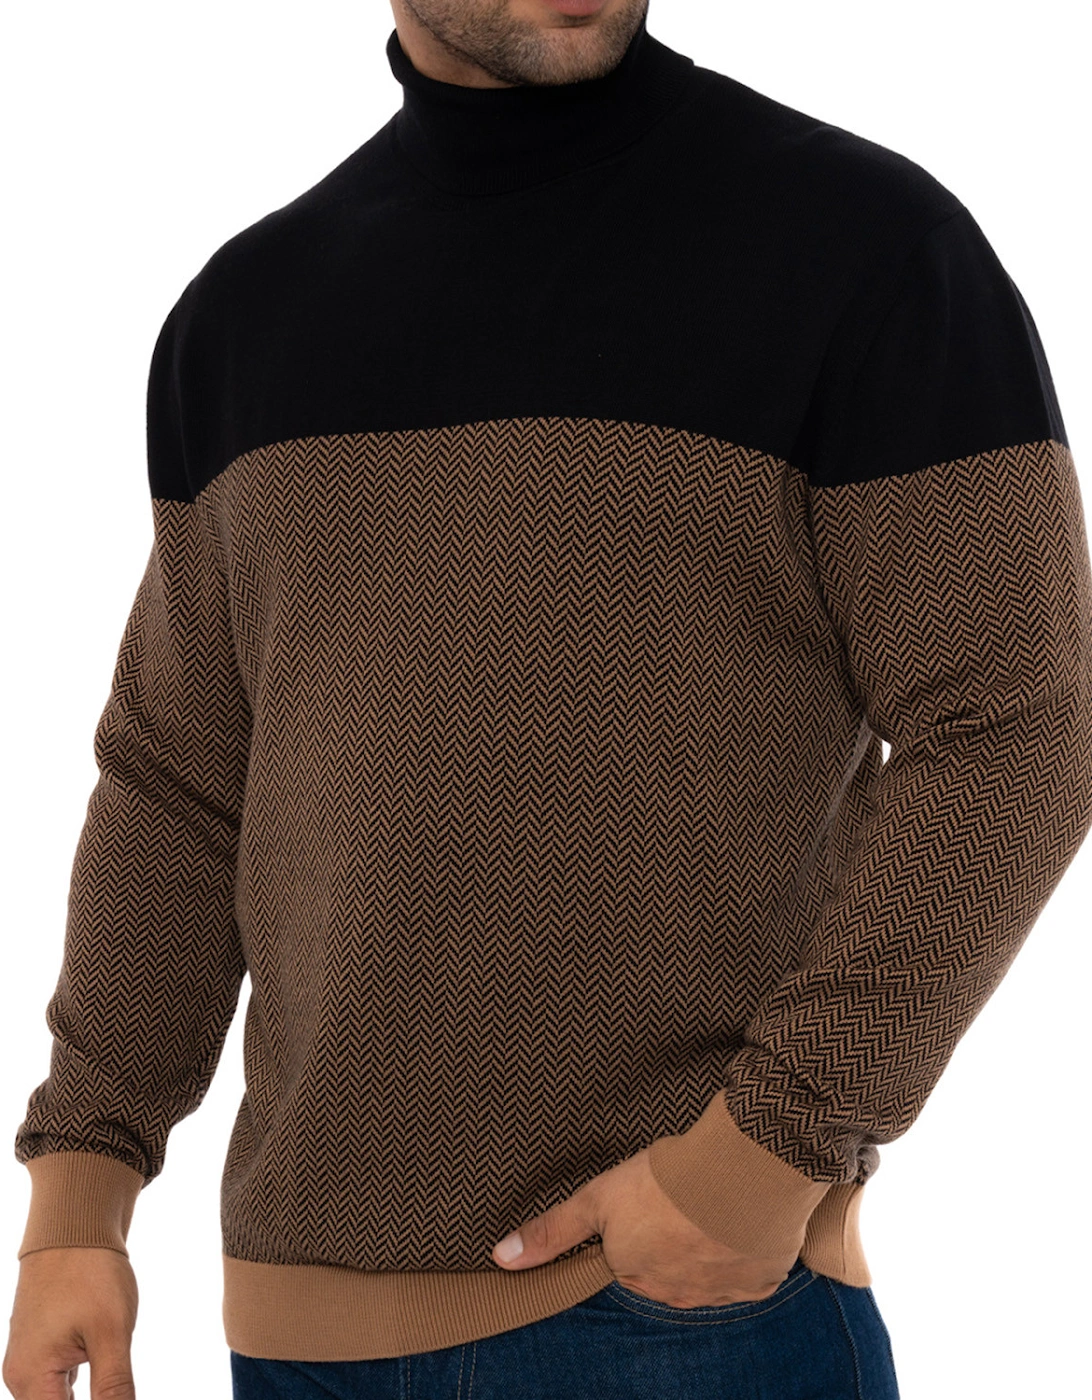 Mens Weave Panel Roll Neck Knit Sweatshirt (Black/Brown)